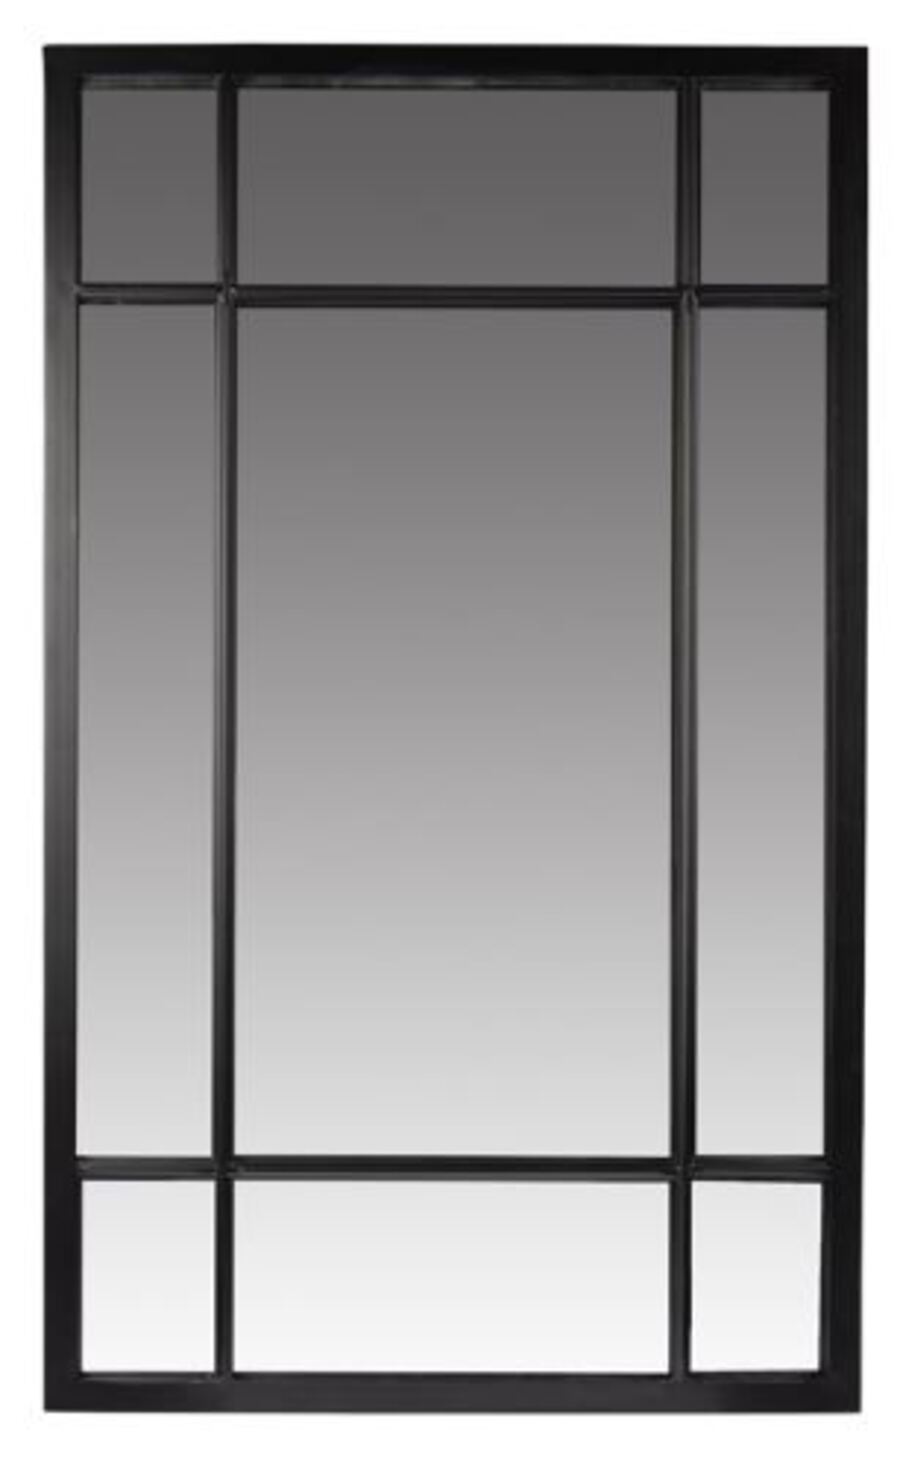 Zimba Wall Metal Mirror Black SLVR Grid 60x100 cm - SML